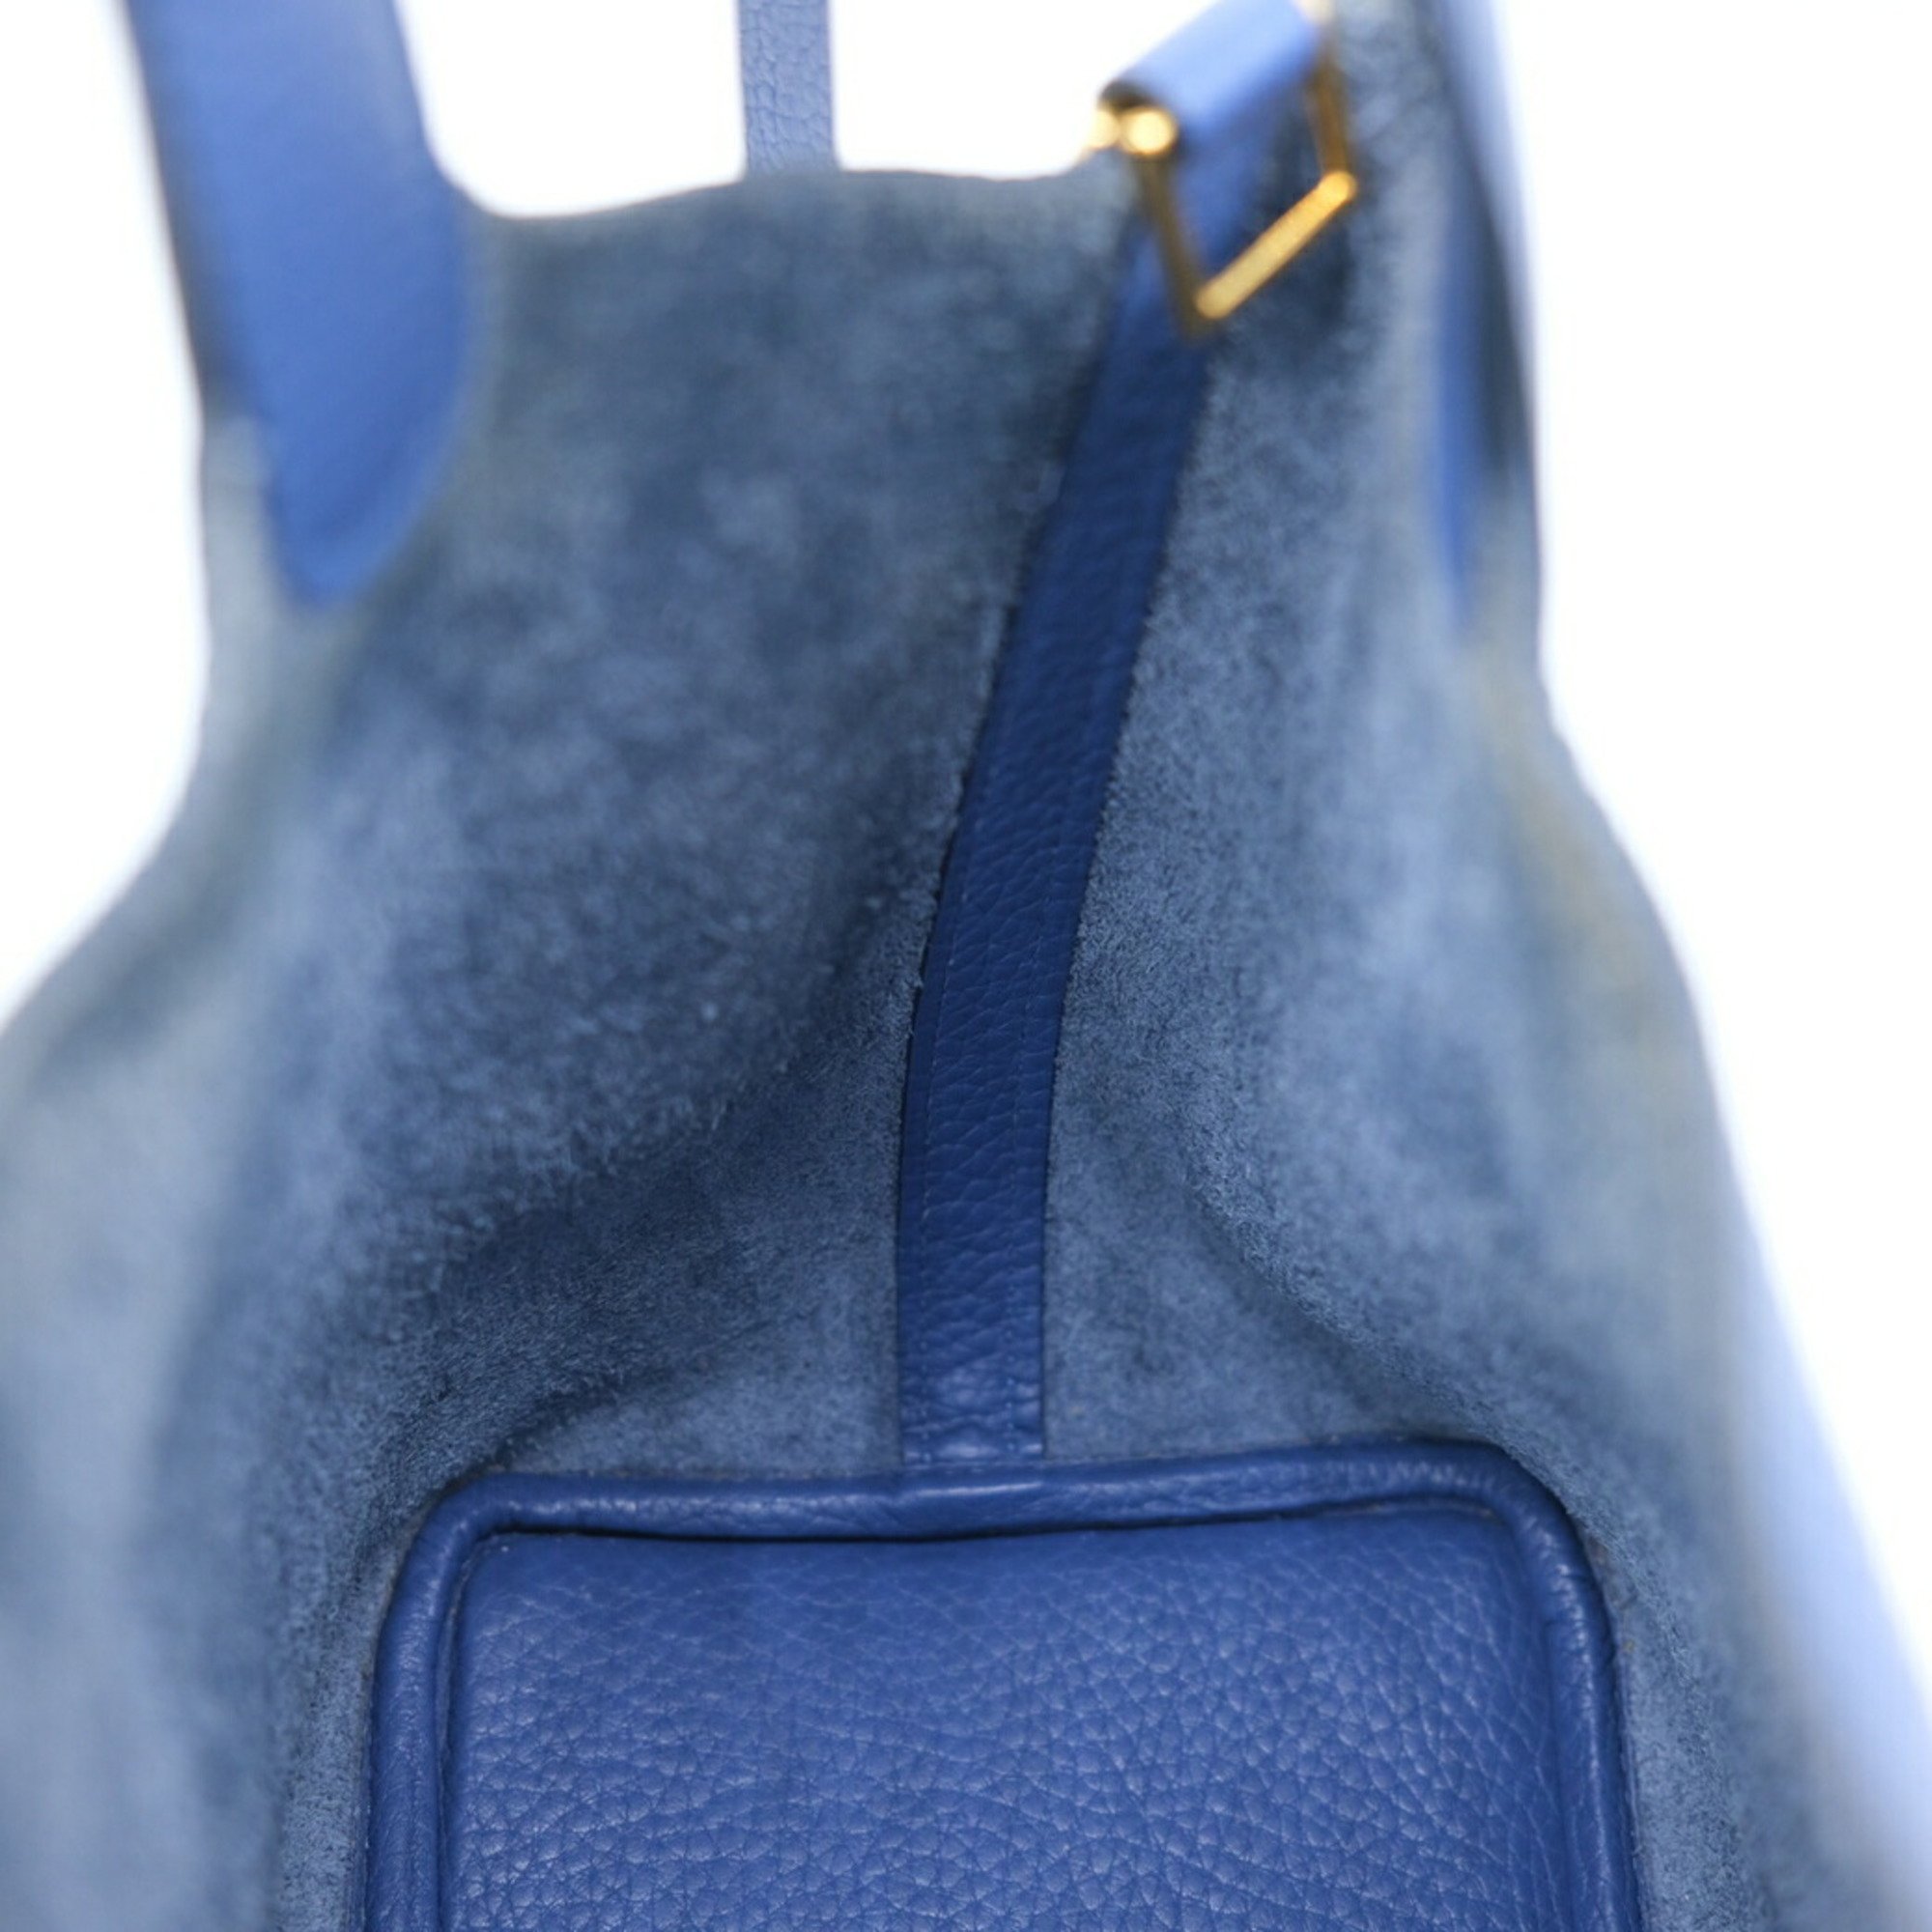 HERMES Picotin Lock PM Handbag Tote Bag Taurillon Clemence Leather Blue Agate